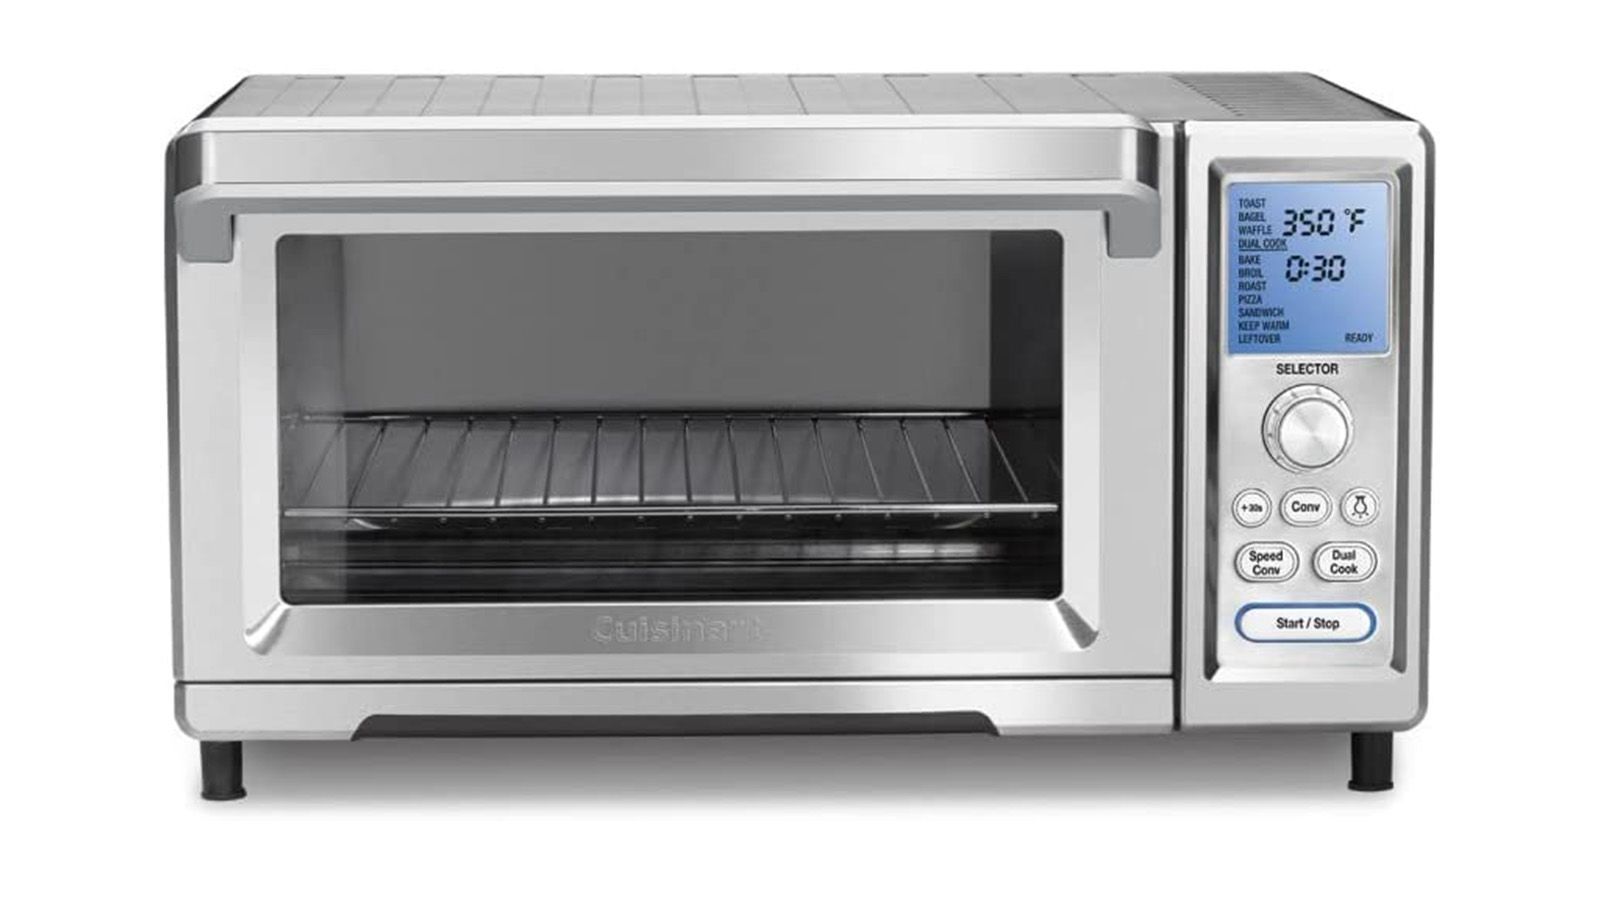 https://media.cnn.com/api/v1/images/stellar/prod/cuisinart-product-card-toaster-ovens.jpg?q=h_900,w_1600,x_0,y_0